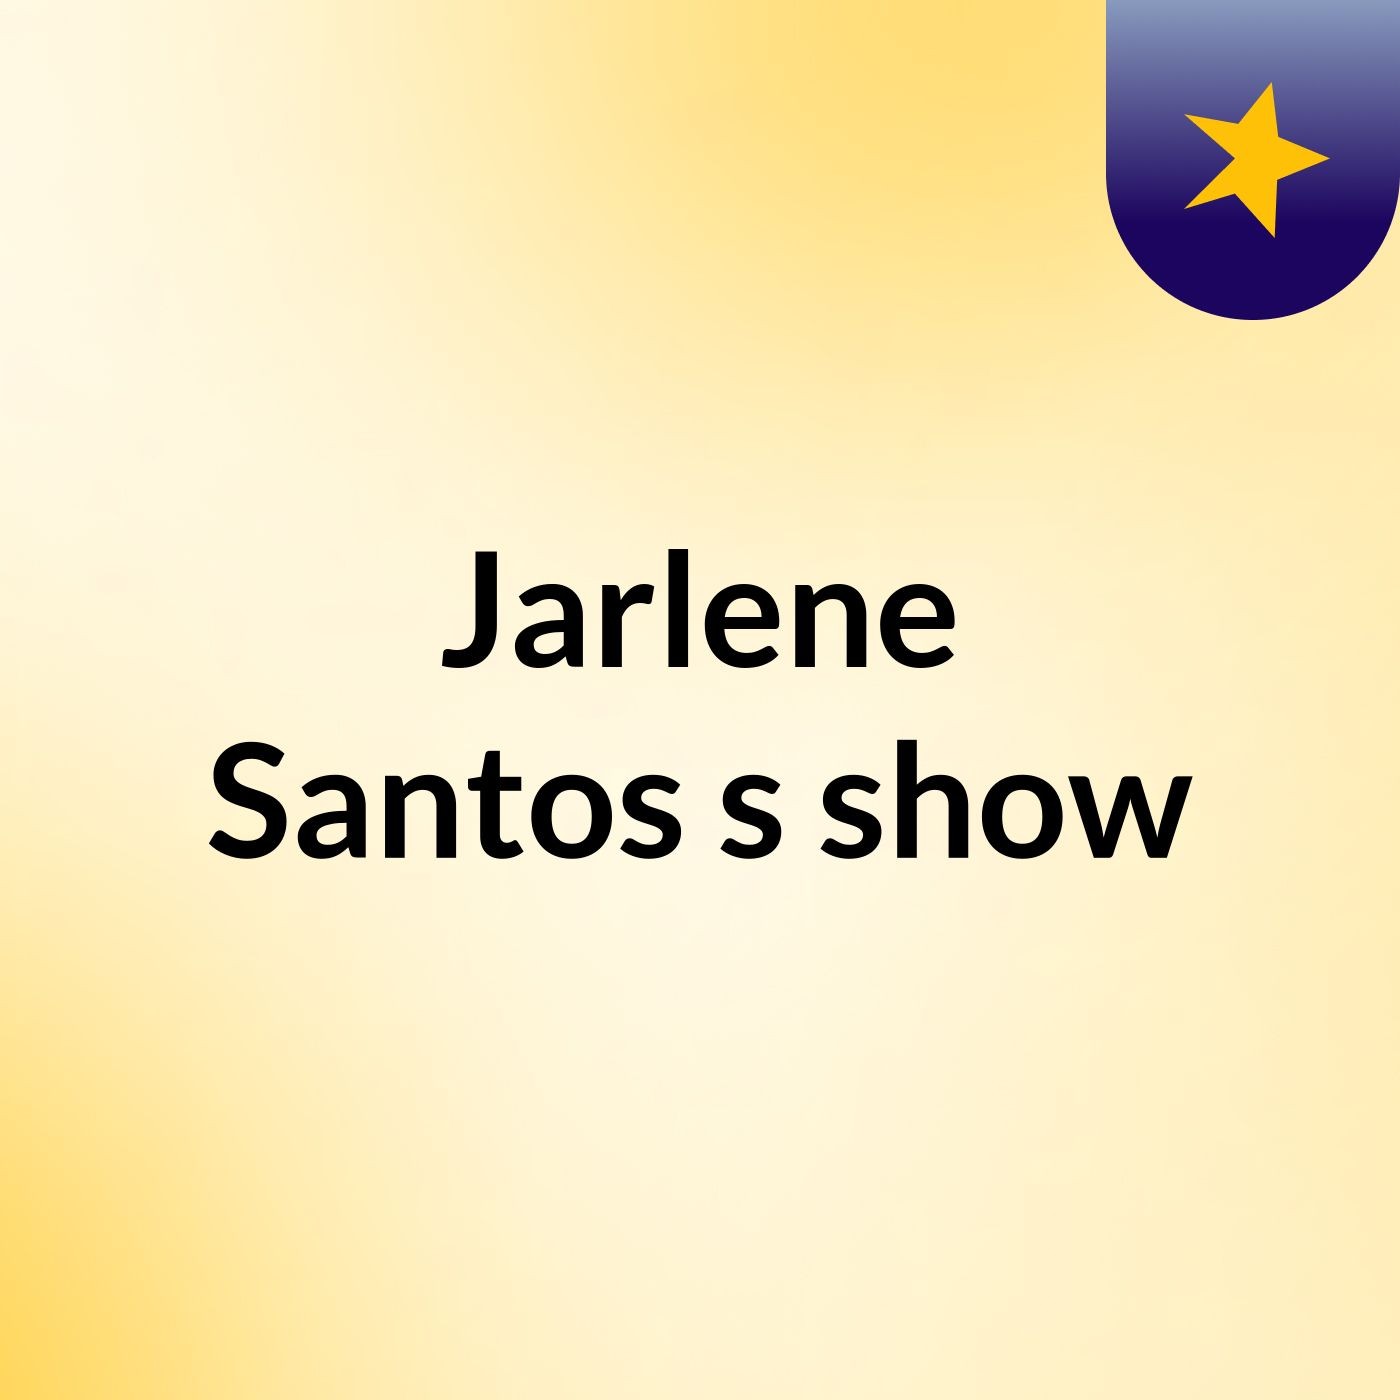 Jarlene Santos's show